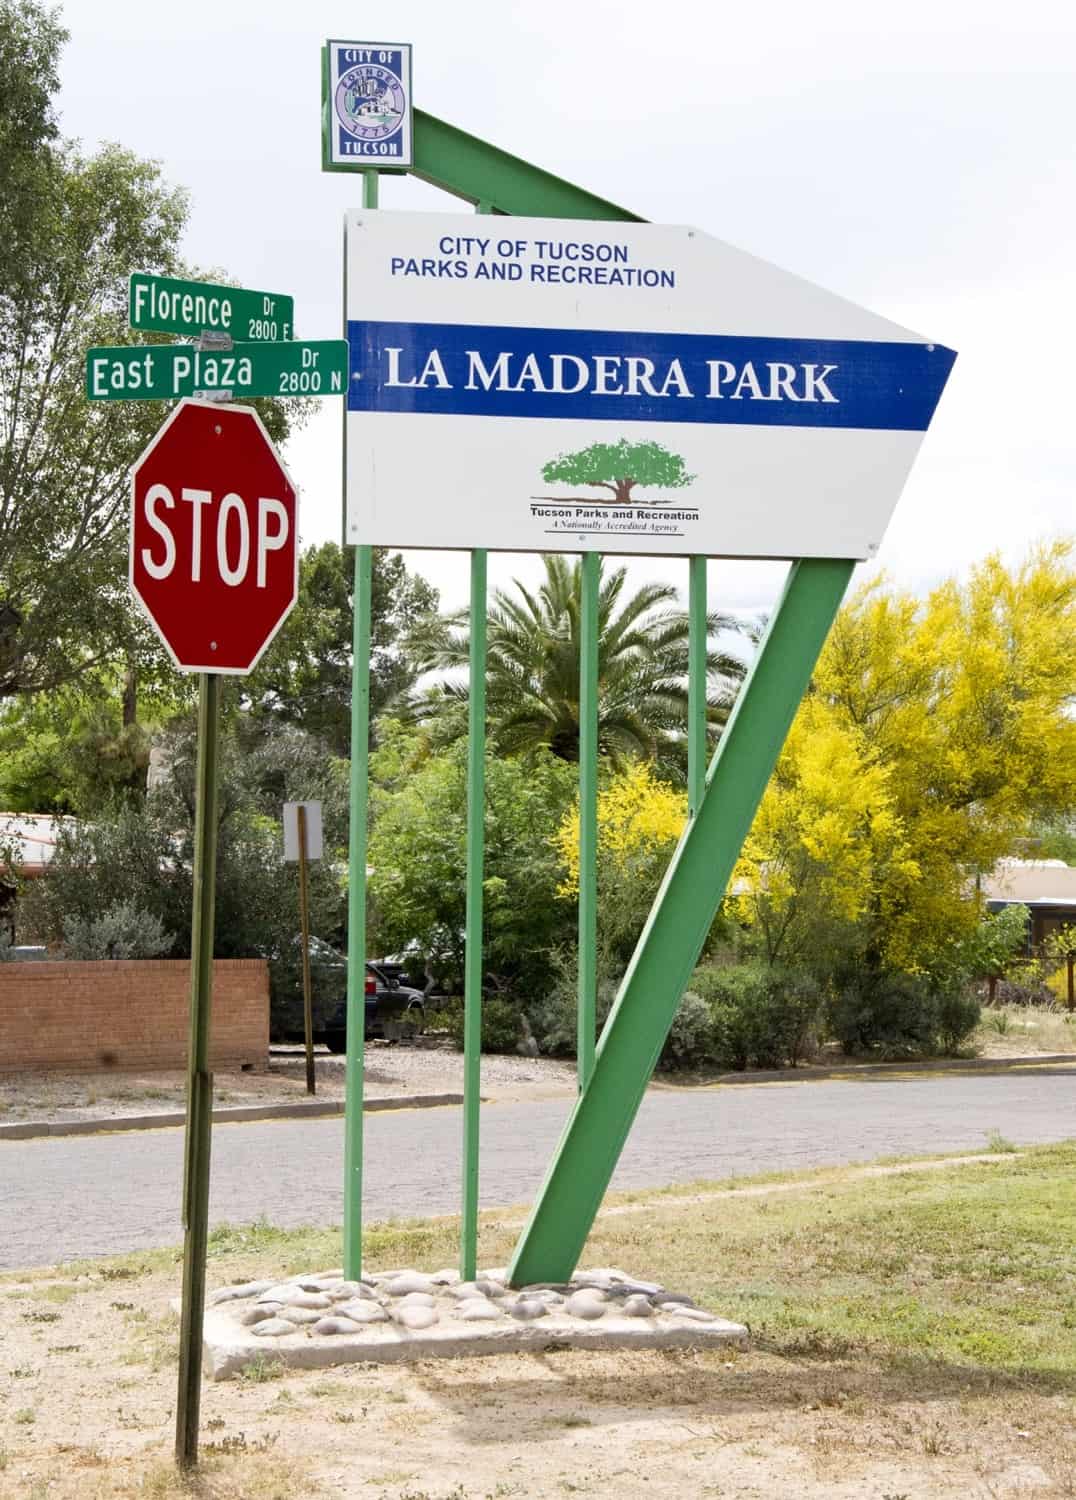 La Madera Park City of Tucson | Park Profile: La Madera Park